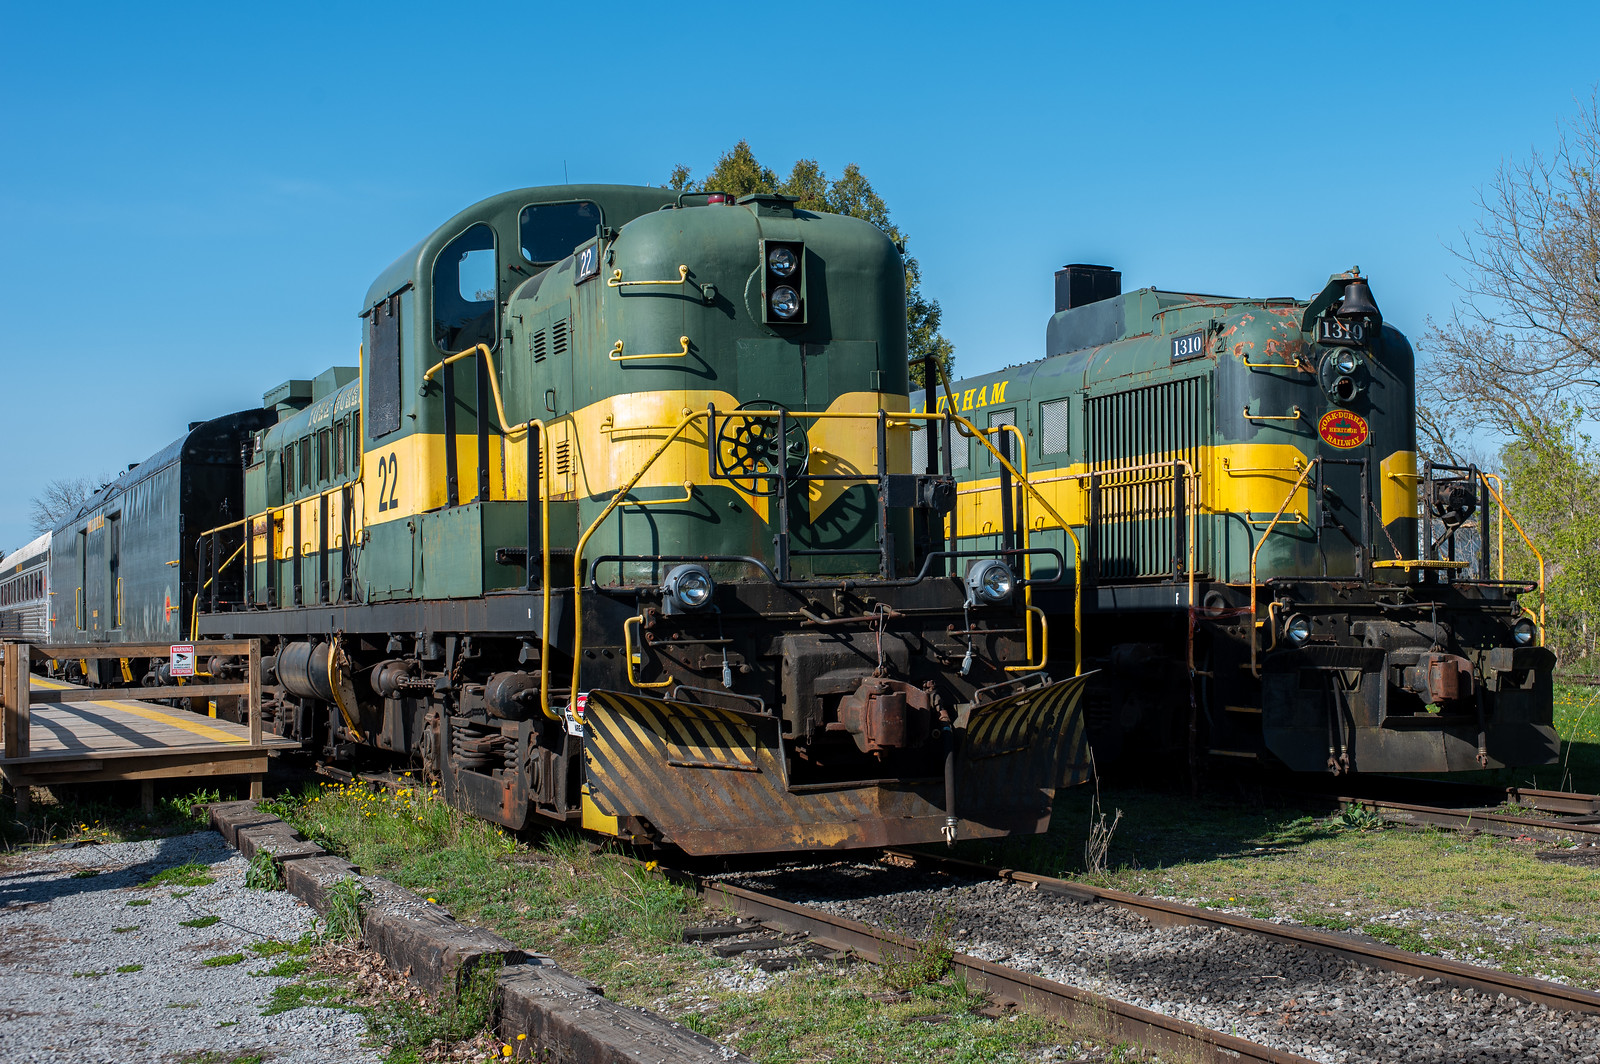 YDHR - Locomotives 22 & 1310